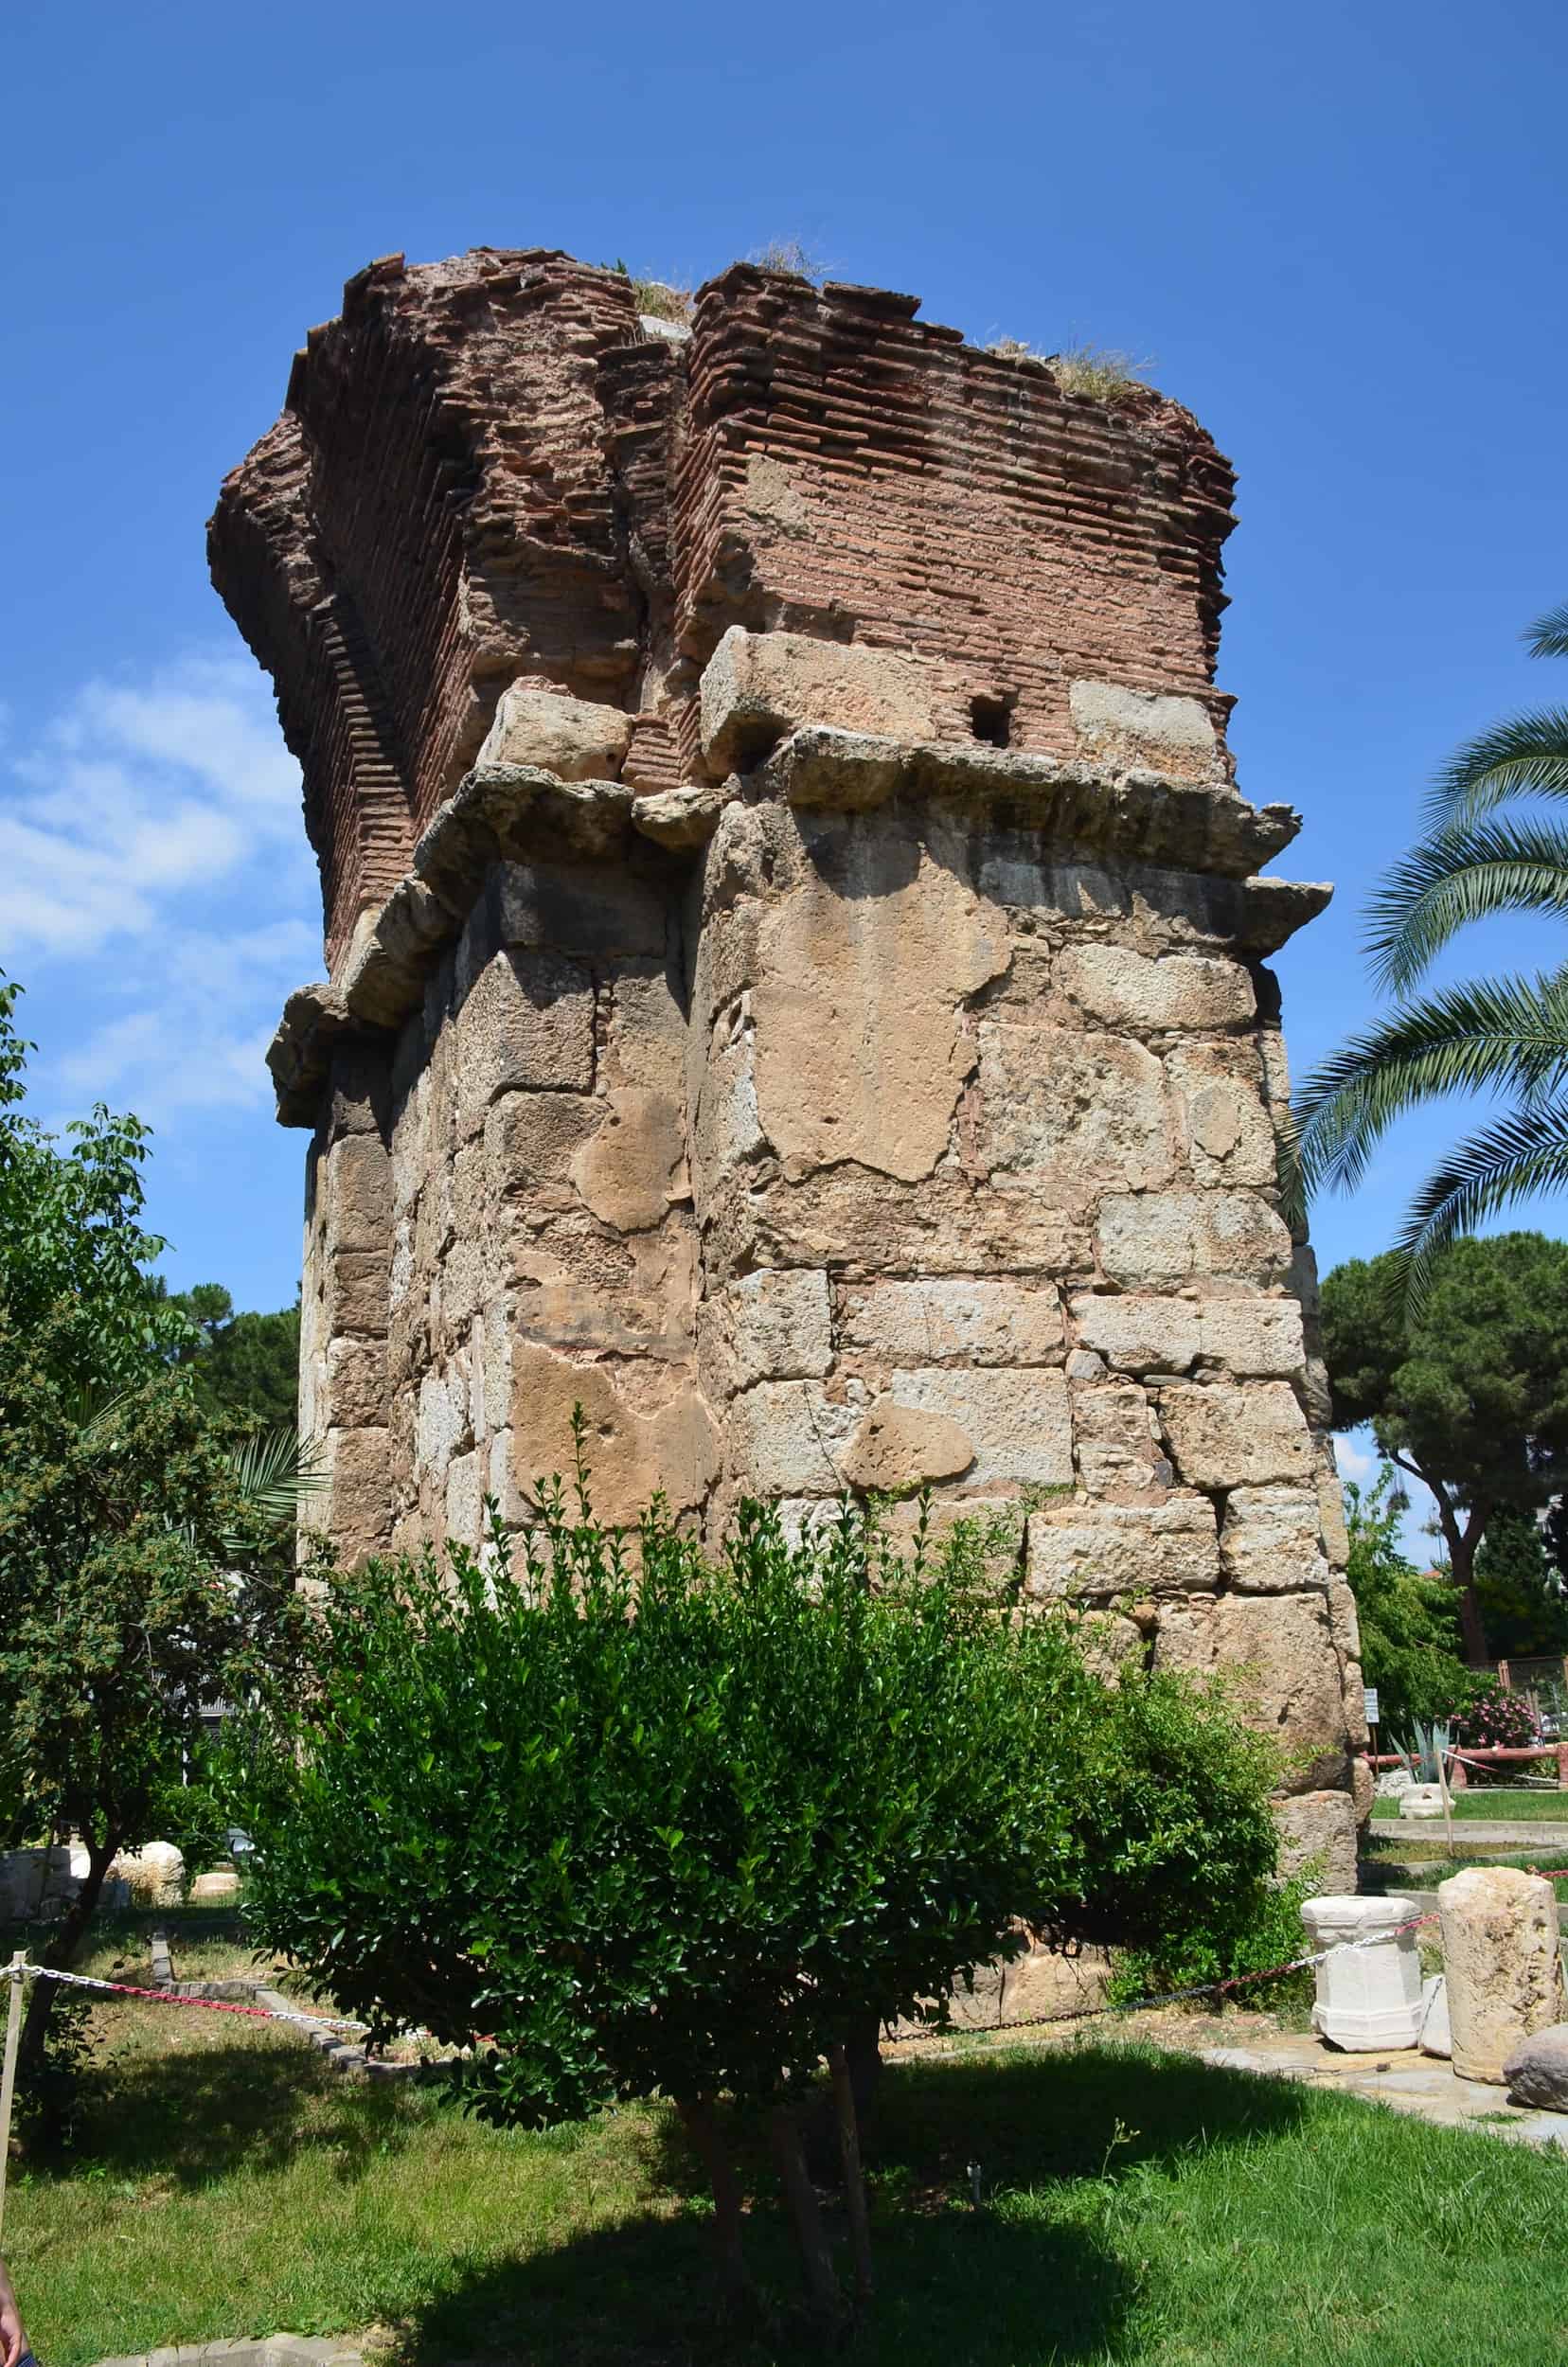 Northwest pillar at the Basilica of Saint John in Alaşehir, Turkey (ancient Philadelphia)